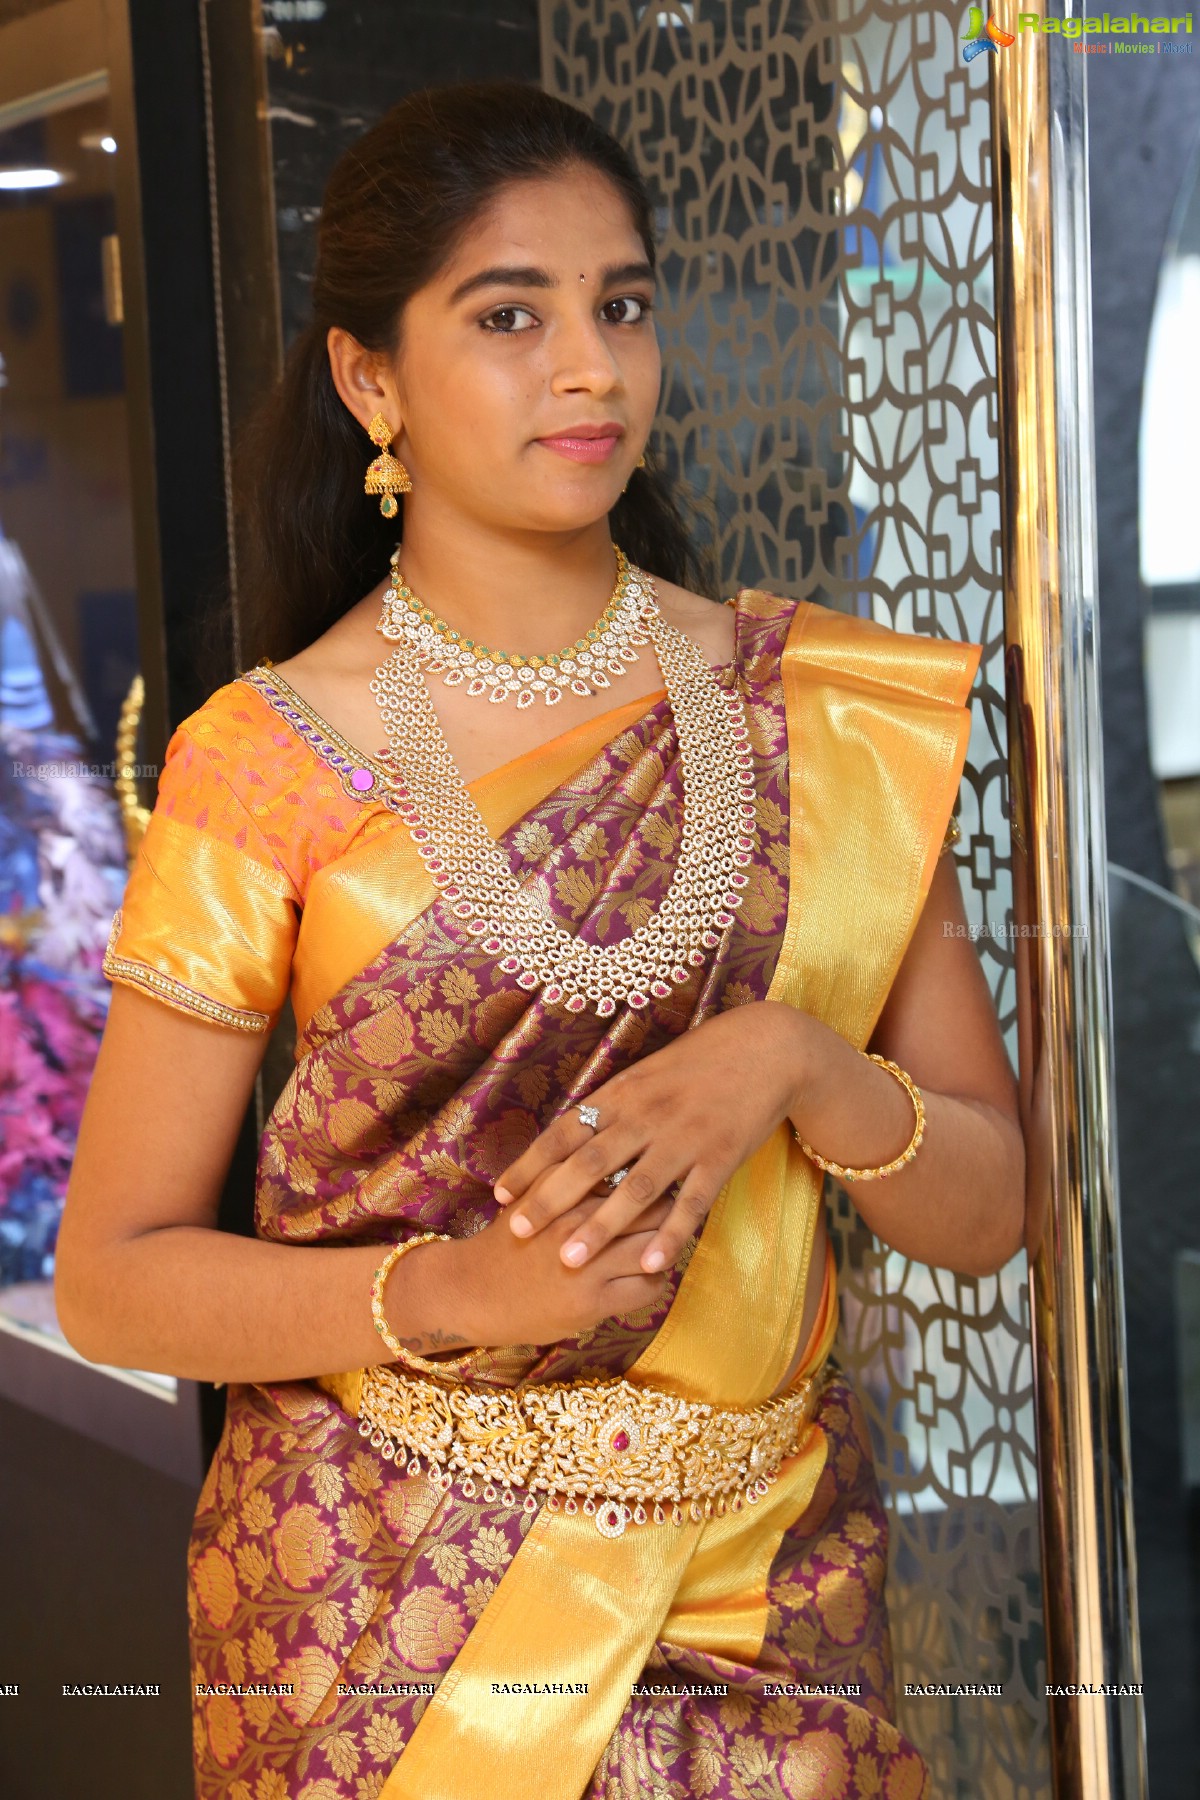 Gold Chainmela at Sree Kumaran Thangamaligai Chennai Silks Showroom